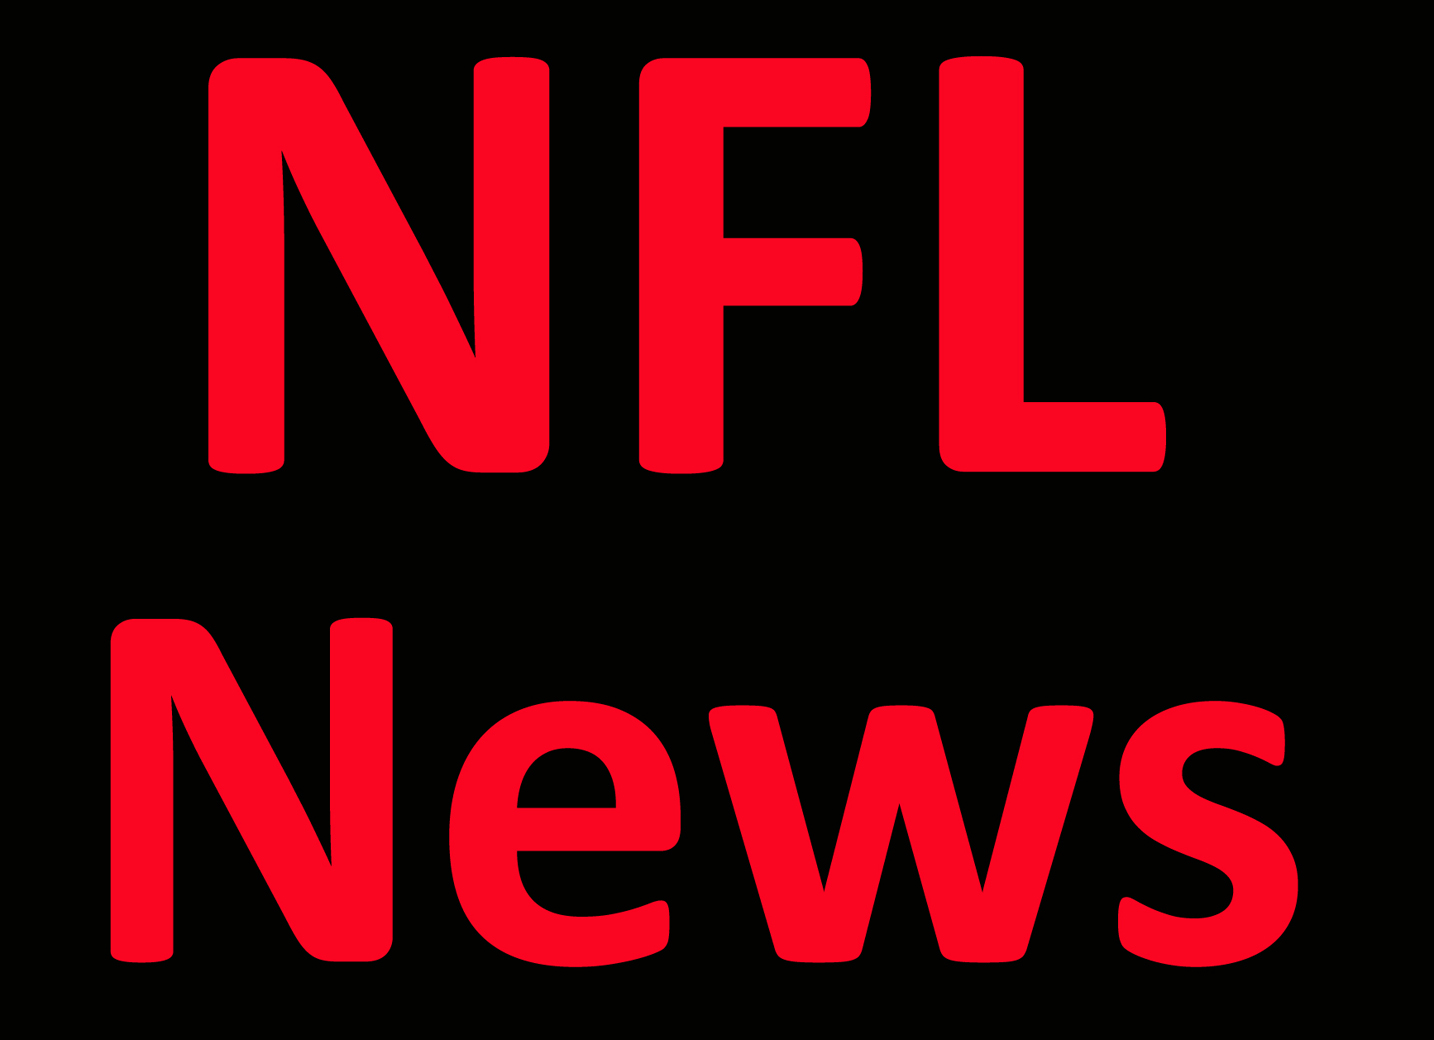 NFL News: Packers’ next step: Reload (not rebuild) around Aaron Rodgers, Davante Adams Per Report